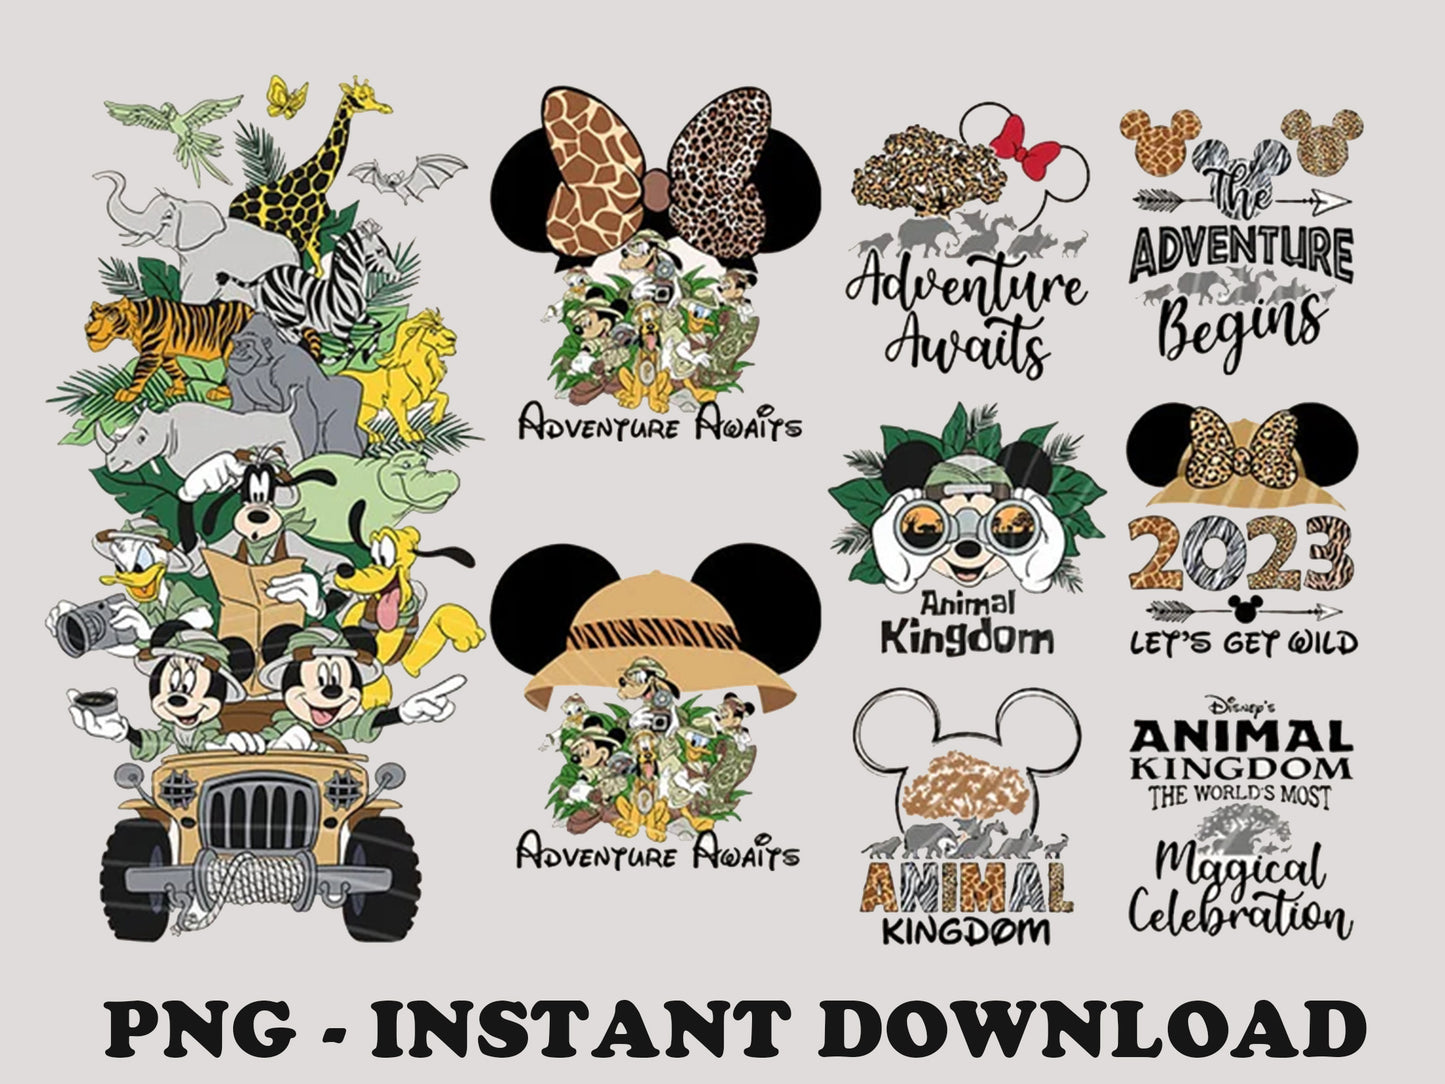 Bundle Animal Kingdom Png, Safari Trip Shirt, Vacation Png, Animal Kingdom Png, Leopard png, Safari Mode, Vacay Mode Png, Instant Download